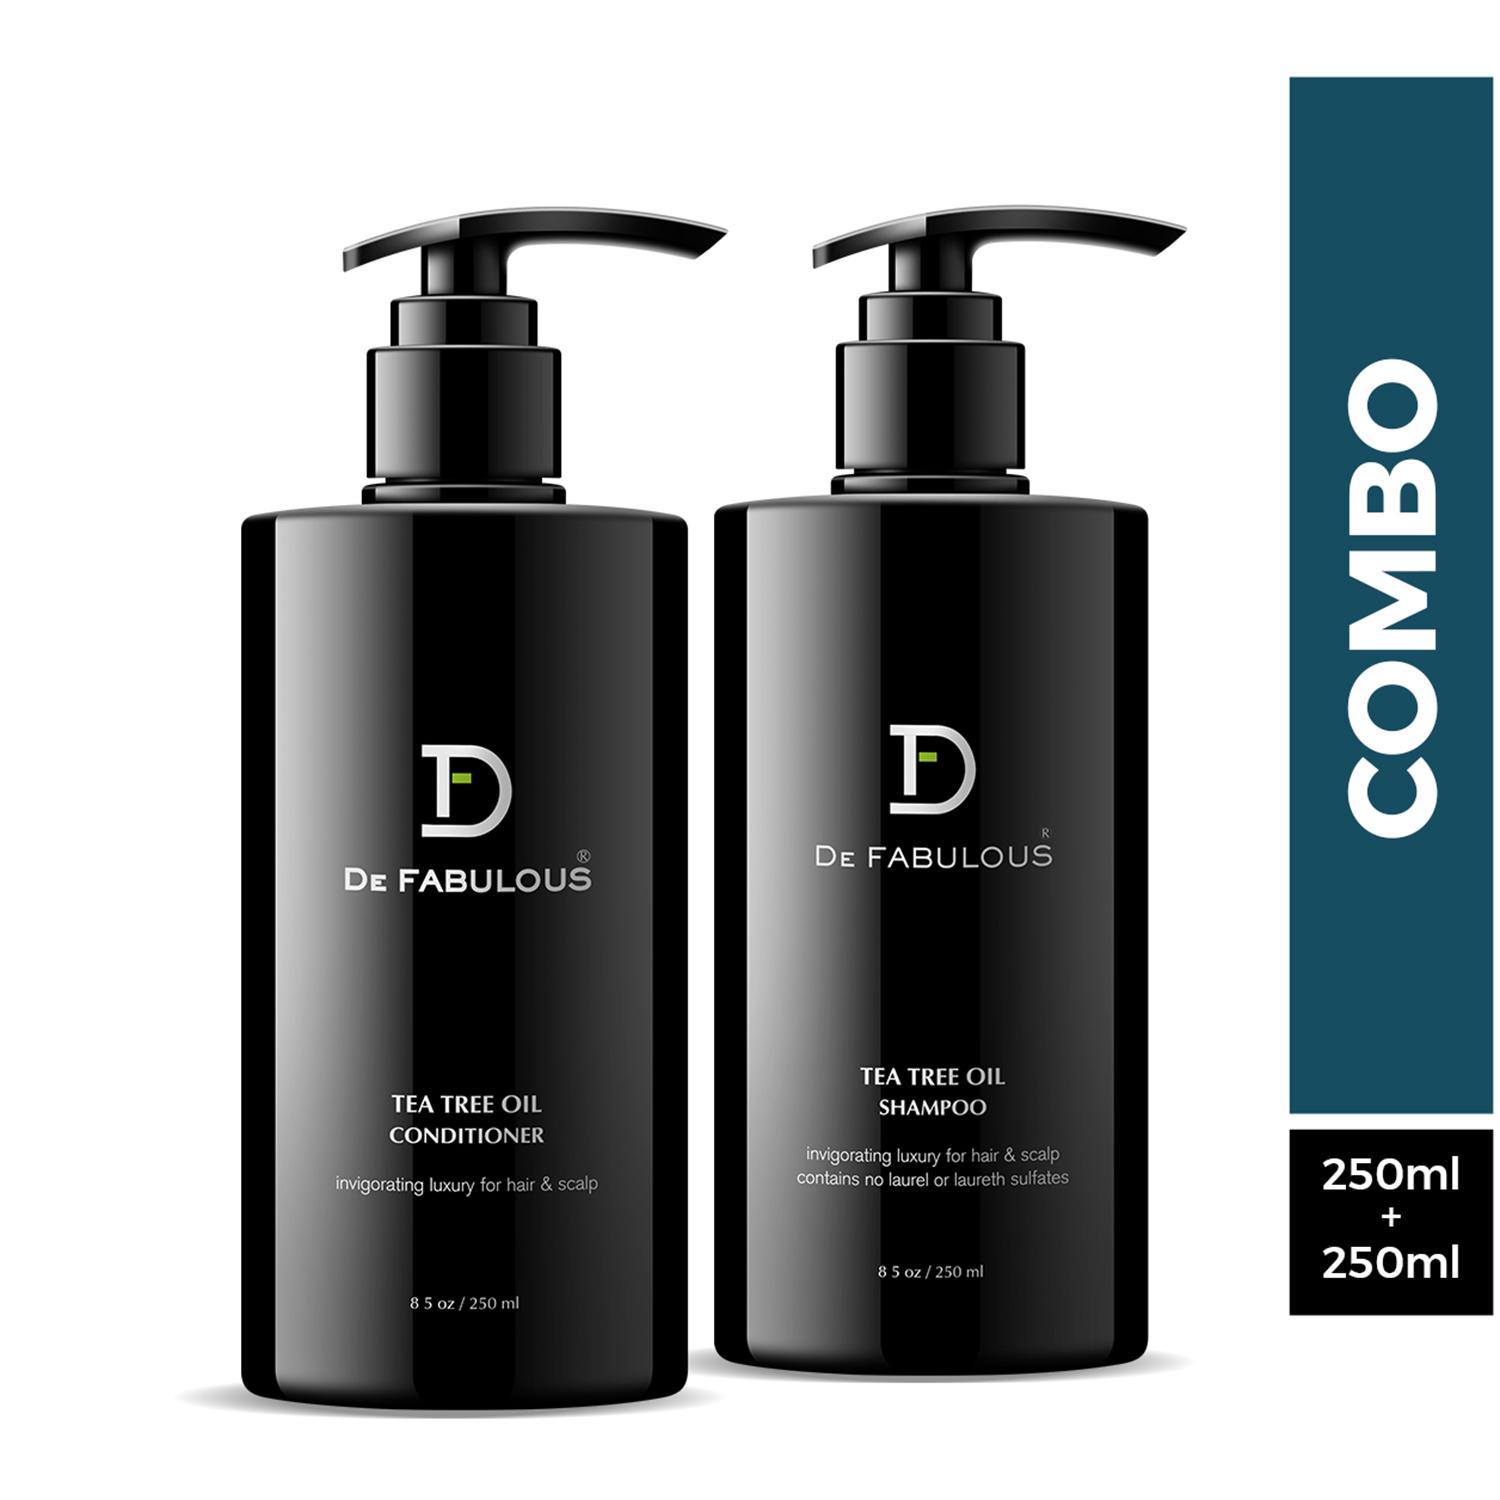 de fabulous tea tree oil shampoo and conditioner -(250ml) combo